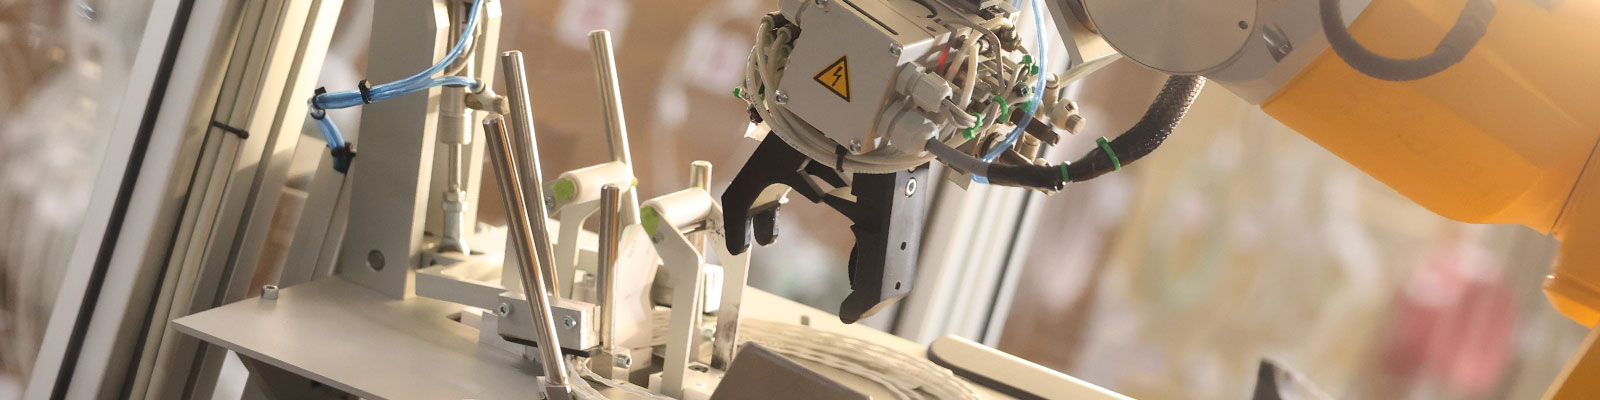 Manufacturing using robotic arms